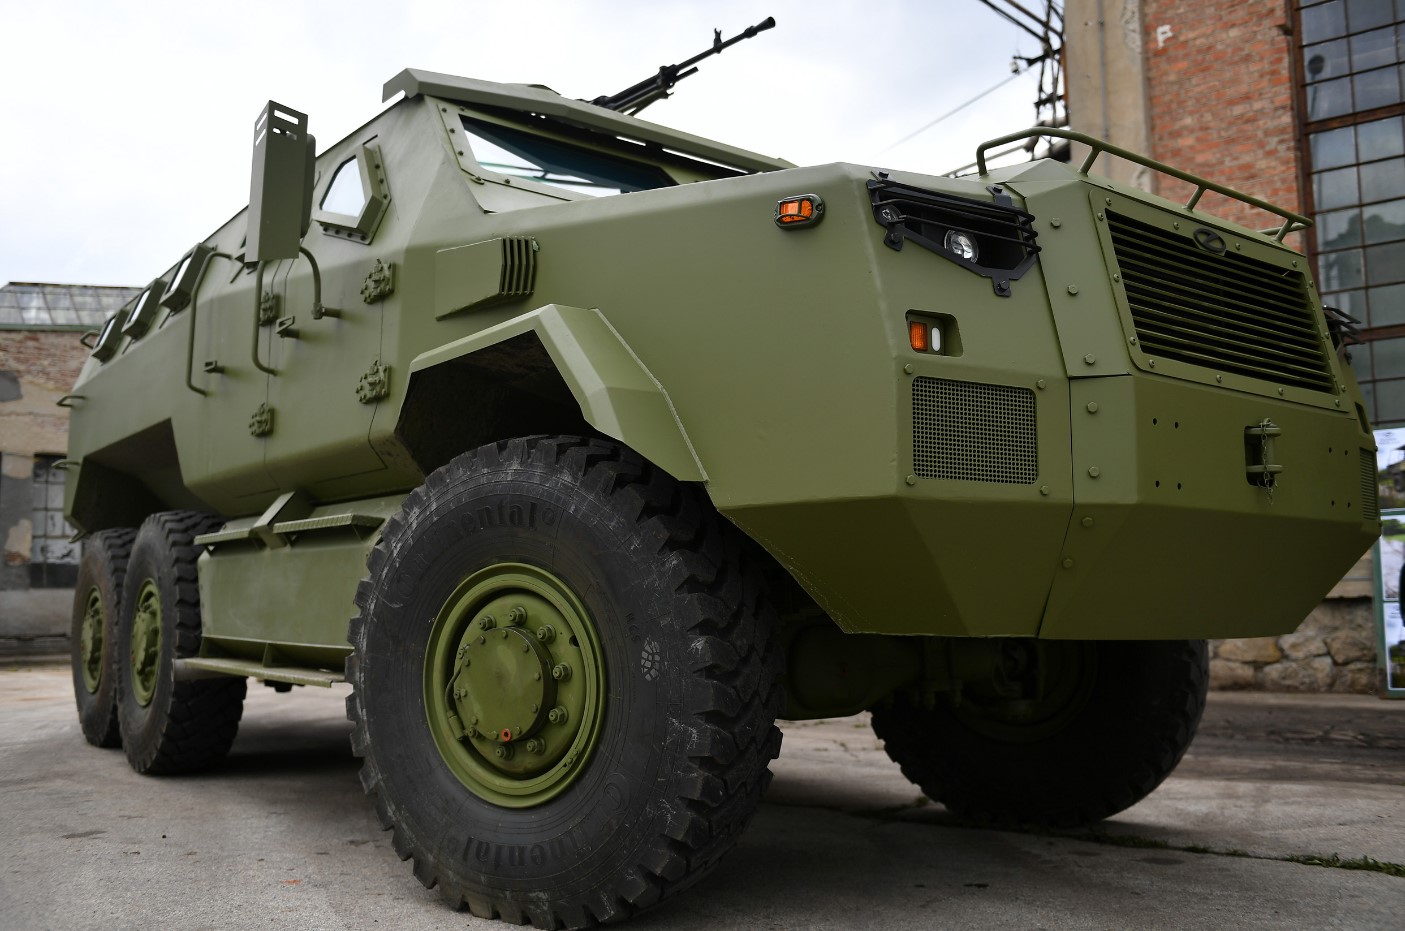 Serbia unveils M-20 MRAP 6x6 armored vehicle - Defense Brief